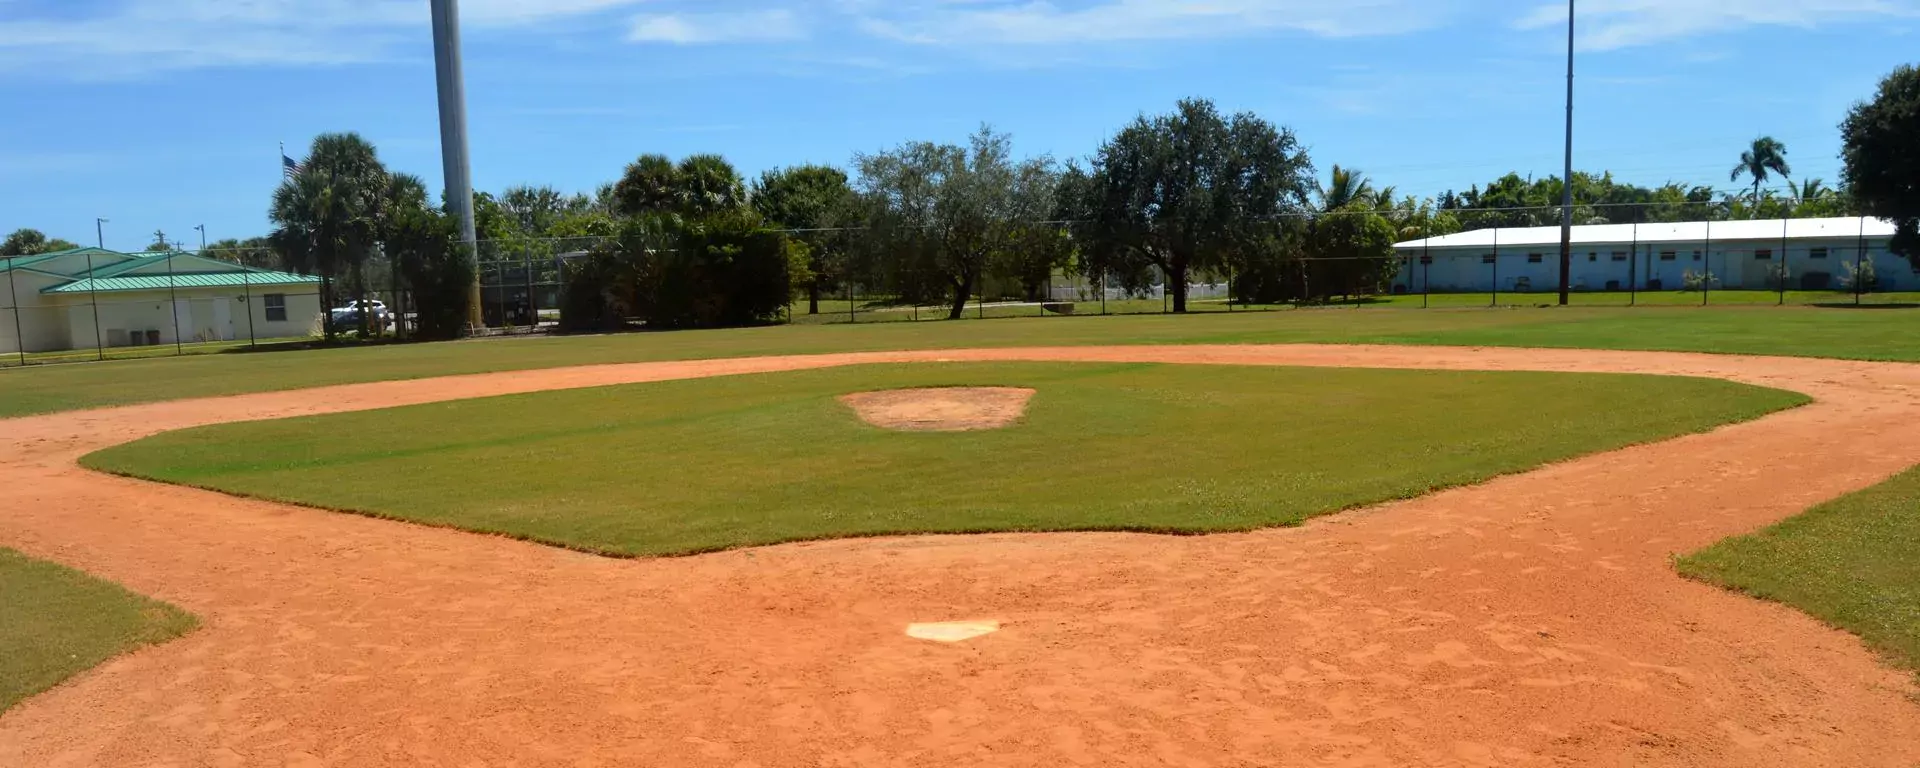 Baseball and softball fields at Langford Park